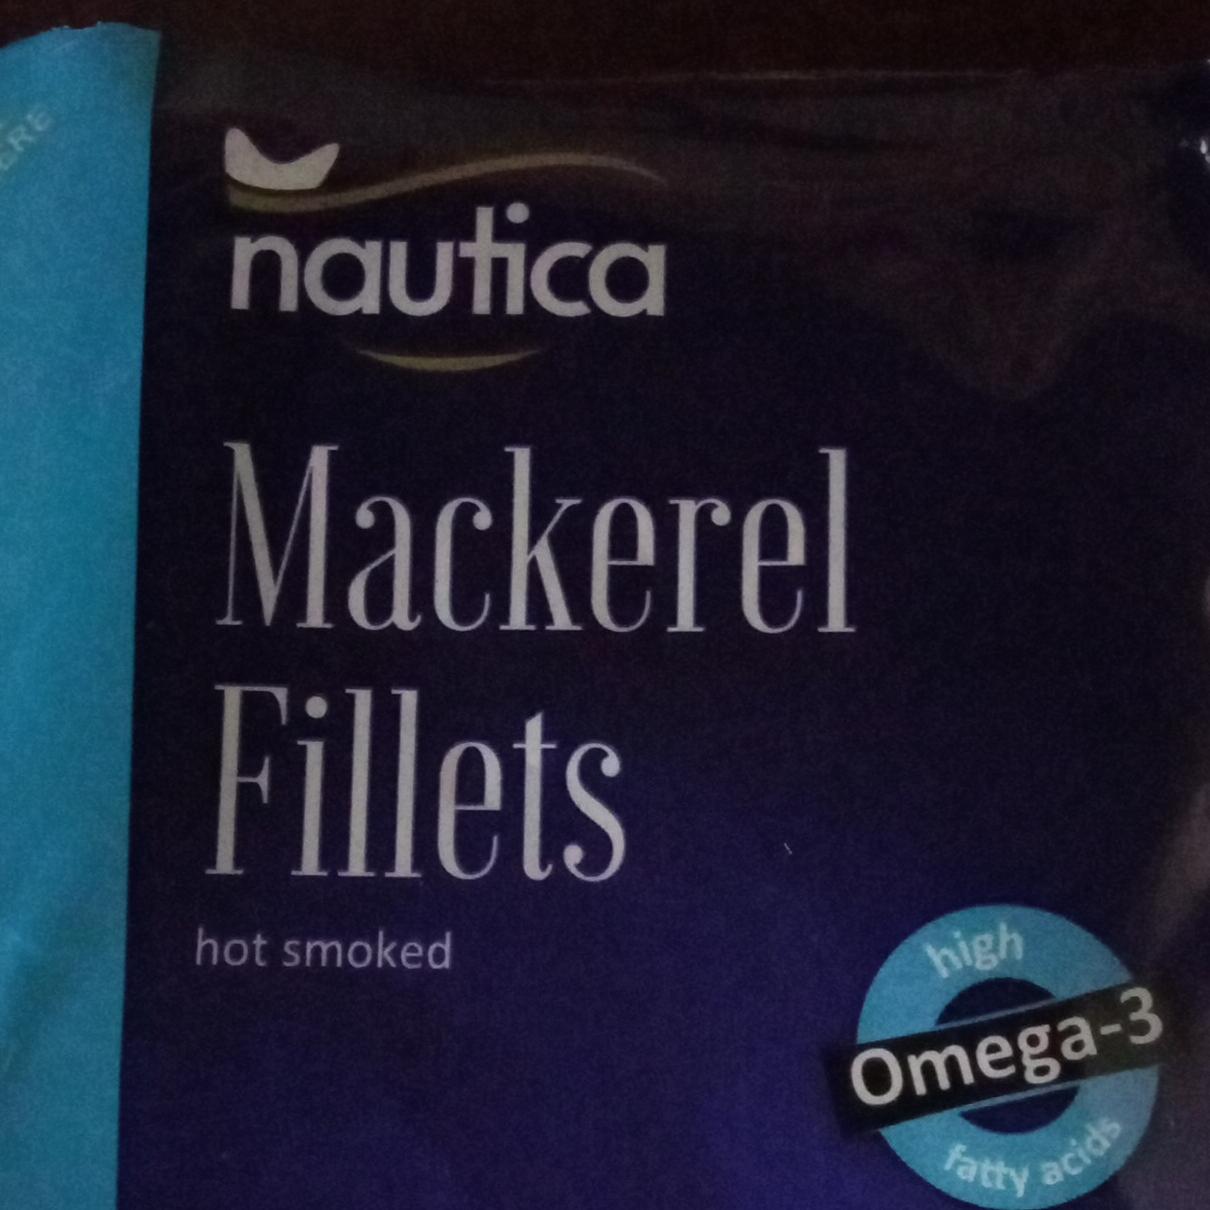 Fotografie - Mackerel Fillets hot smoked Nautica